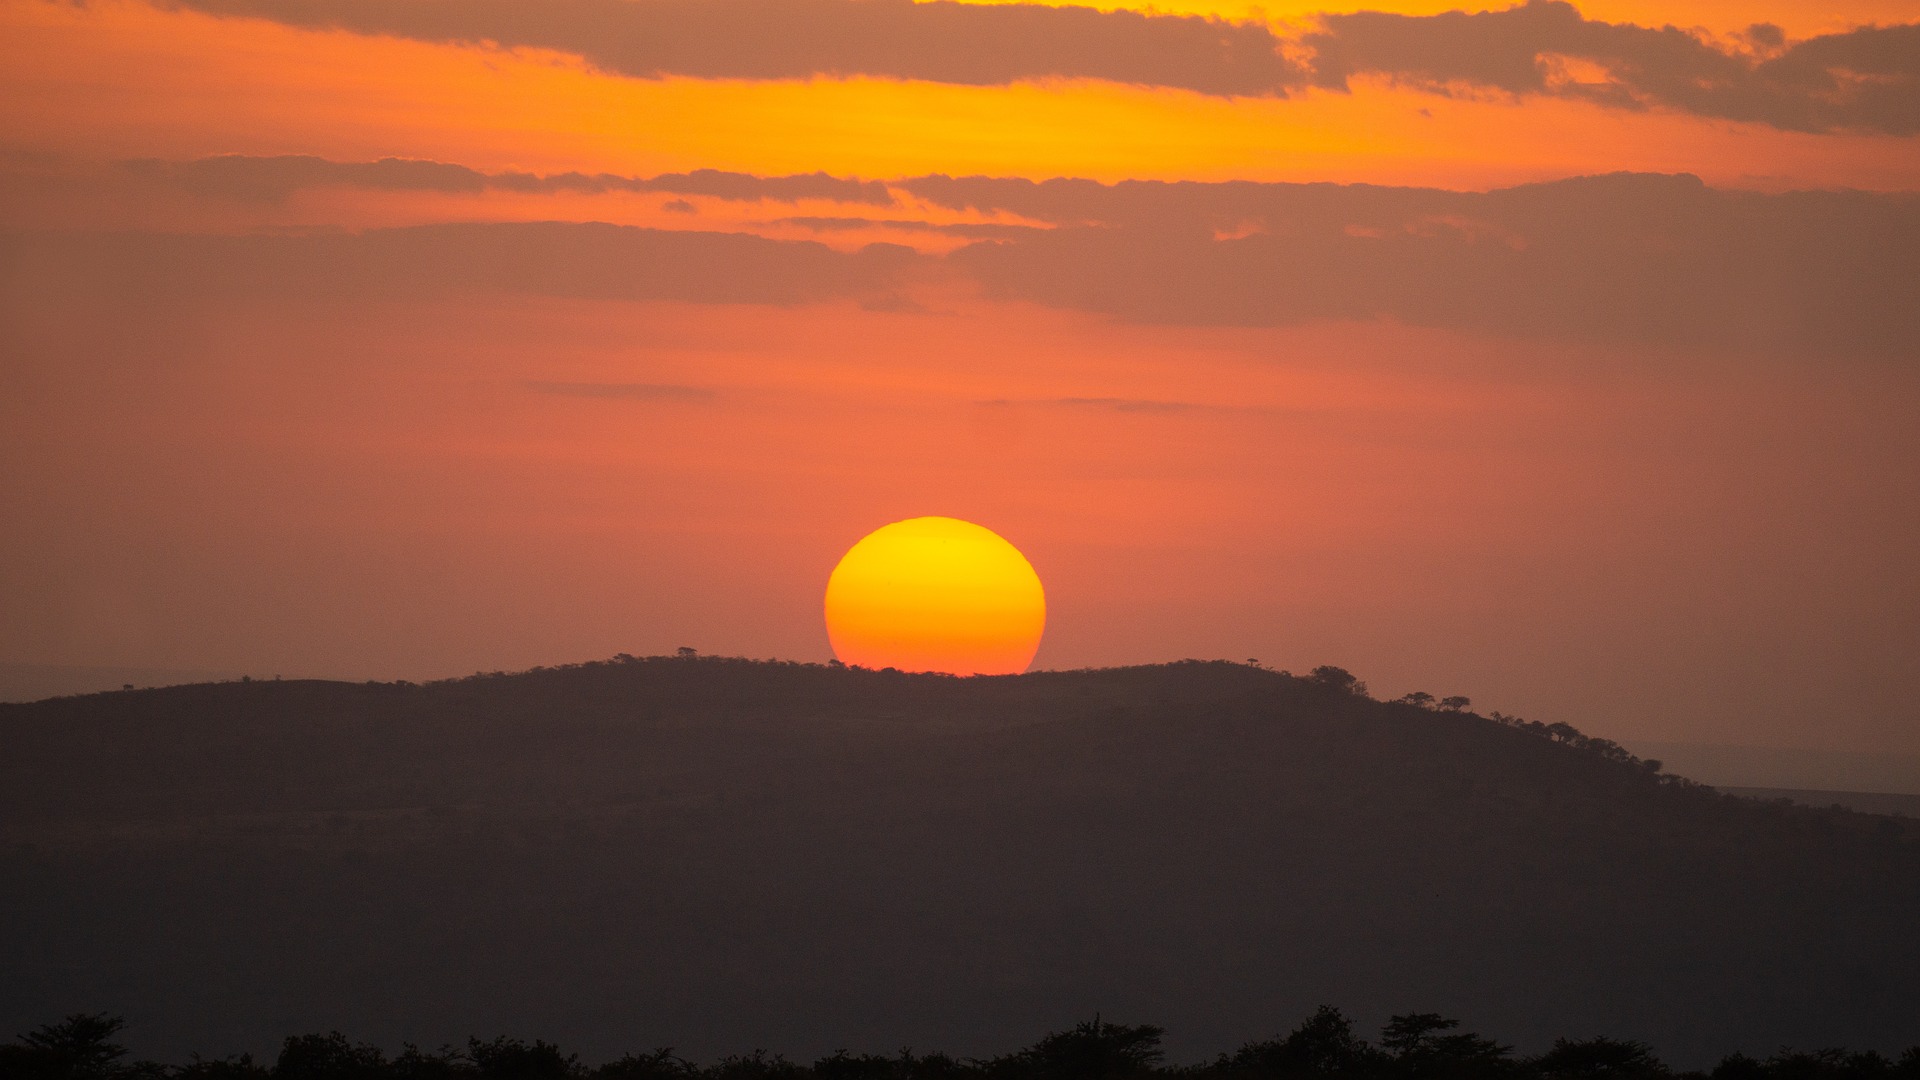 Sunset in Tanzania. An enormous glowing orange sun sinking into the horizon